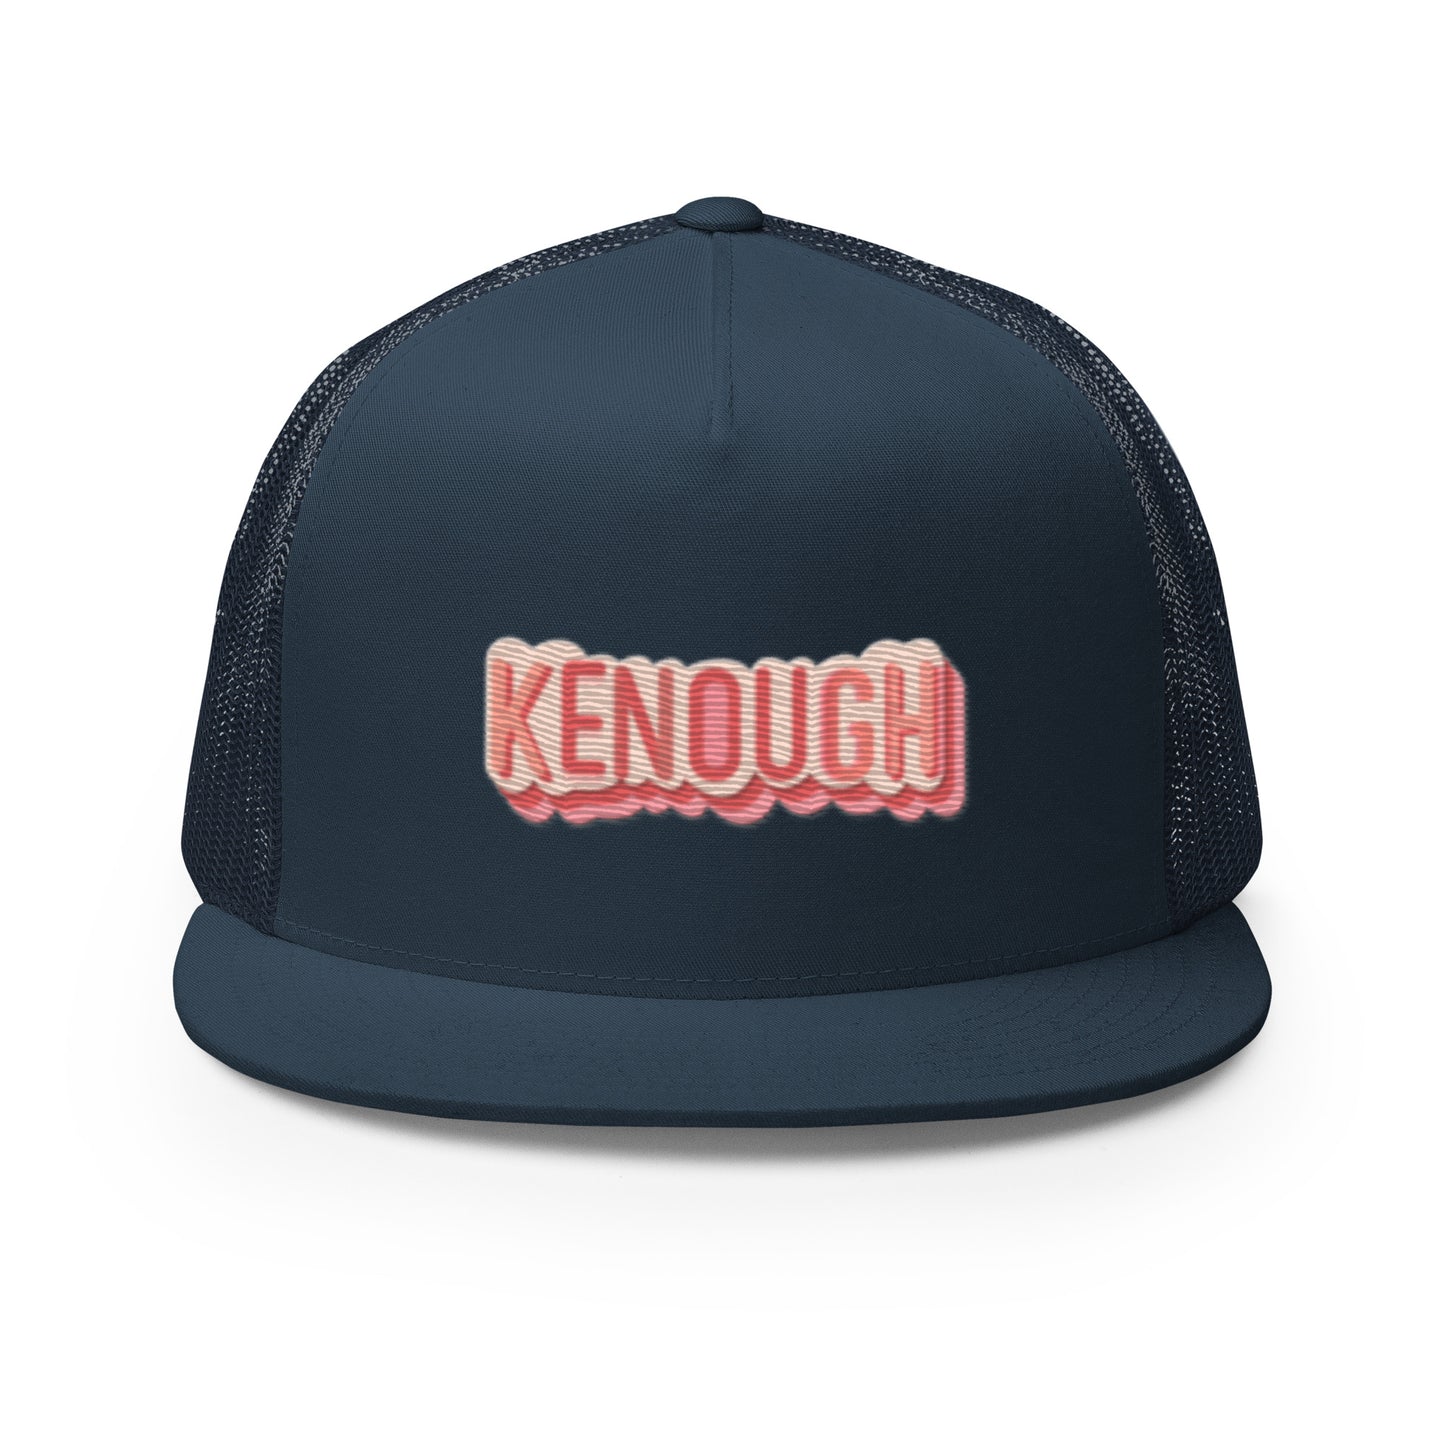 Kenough Trucker Cap